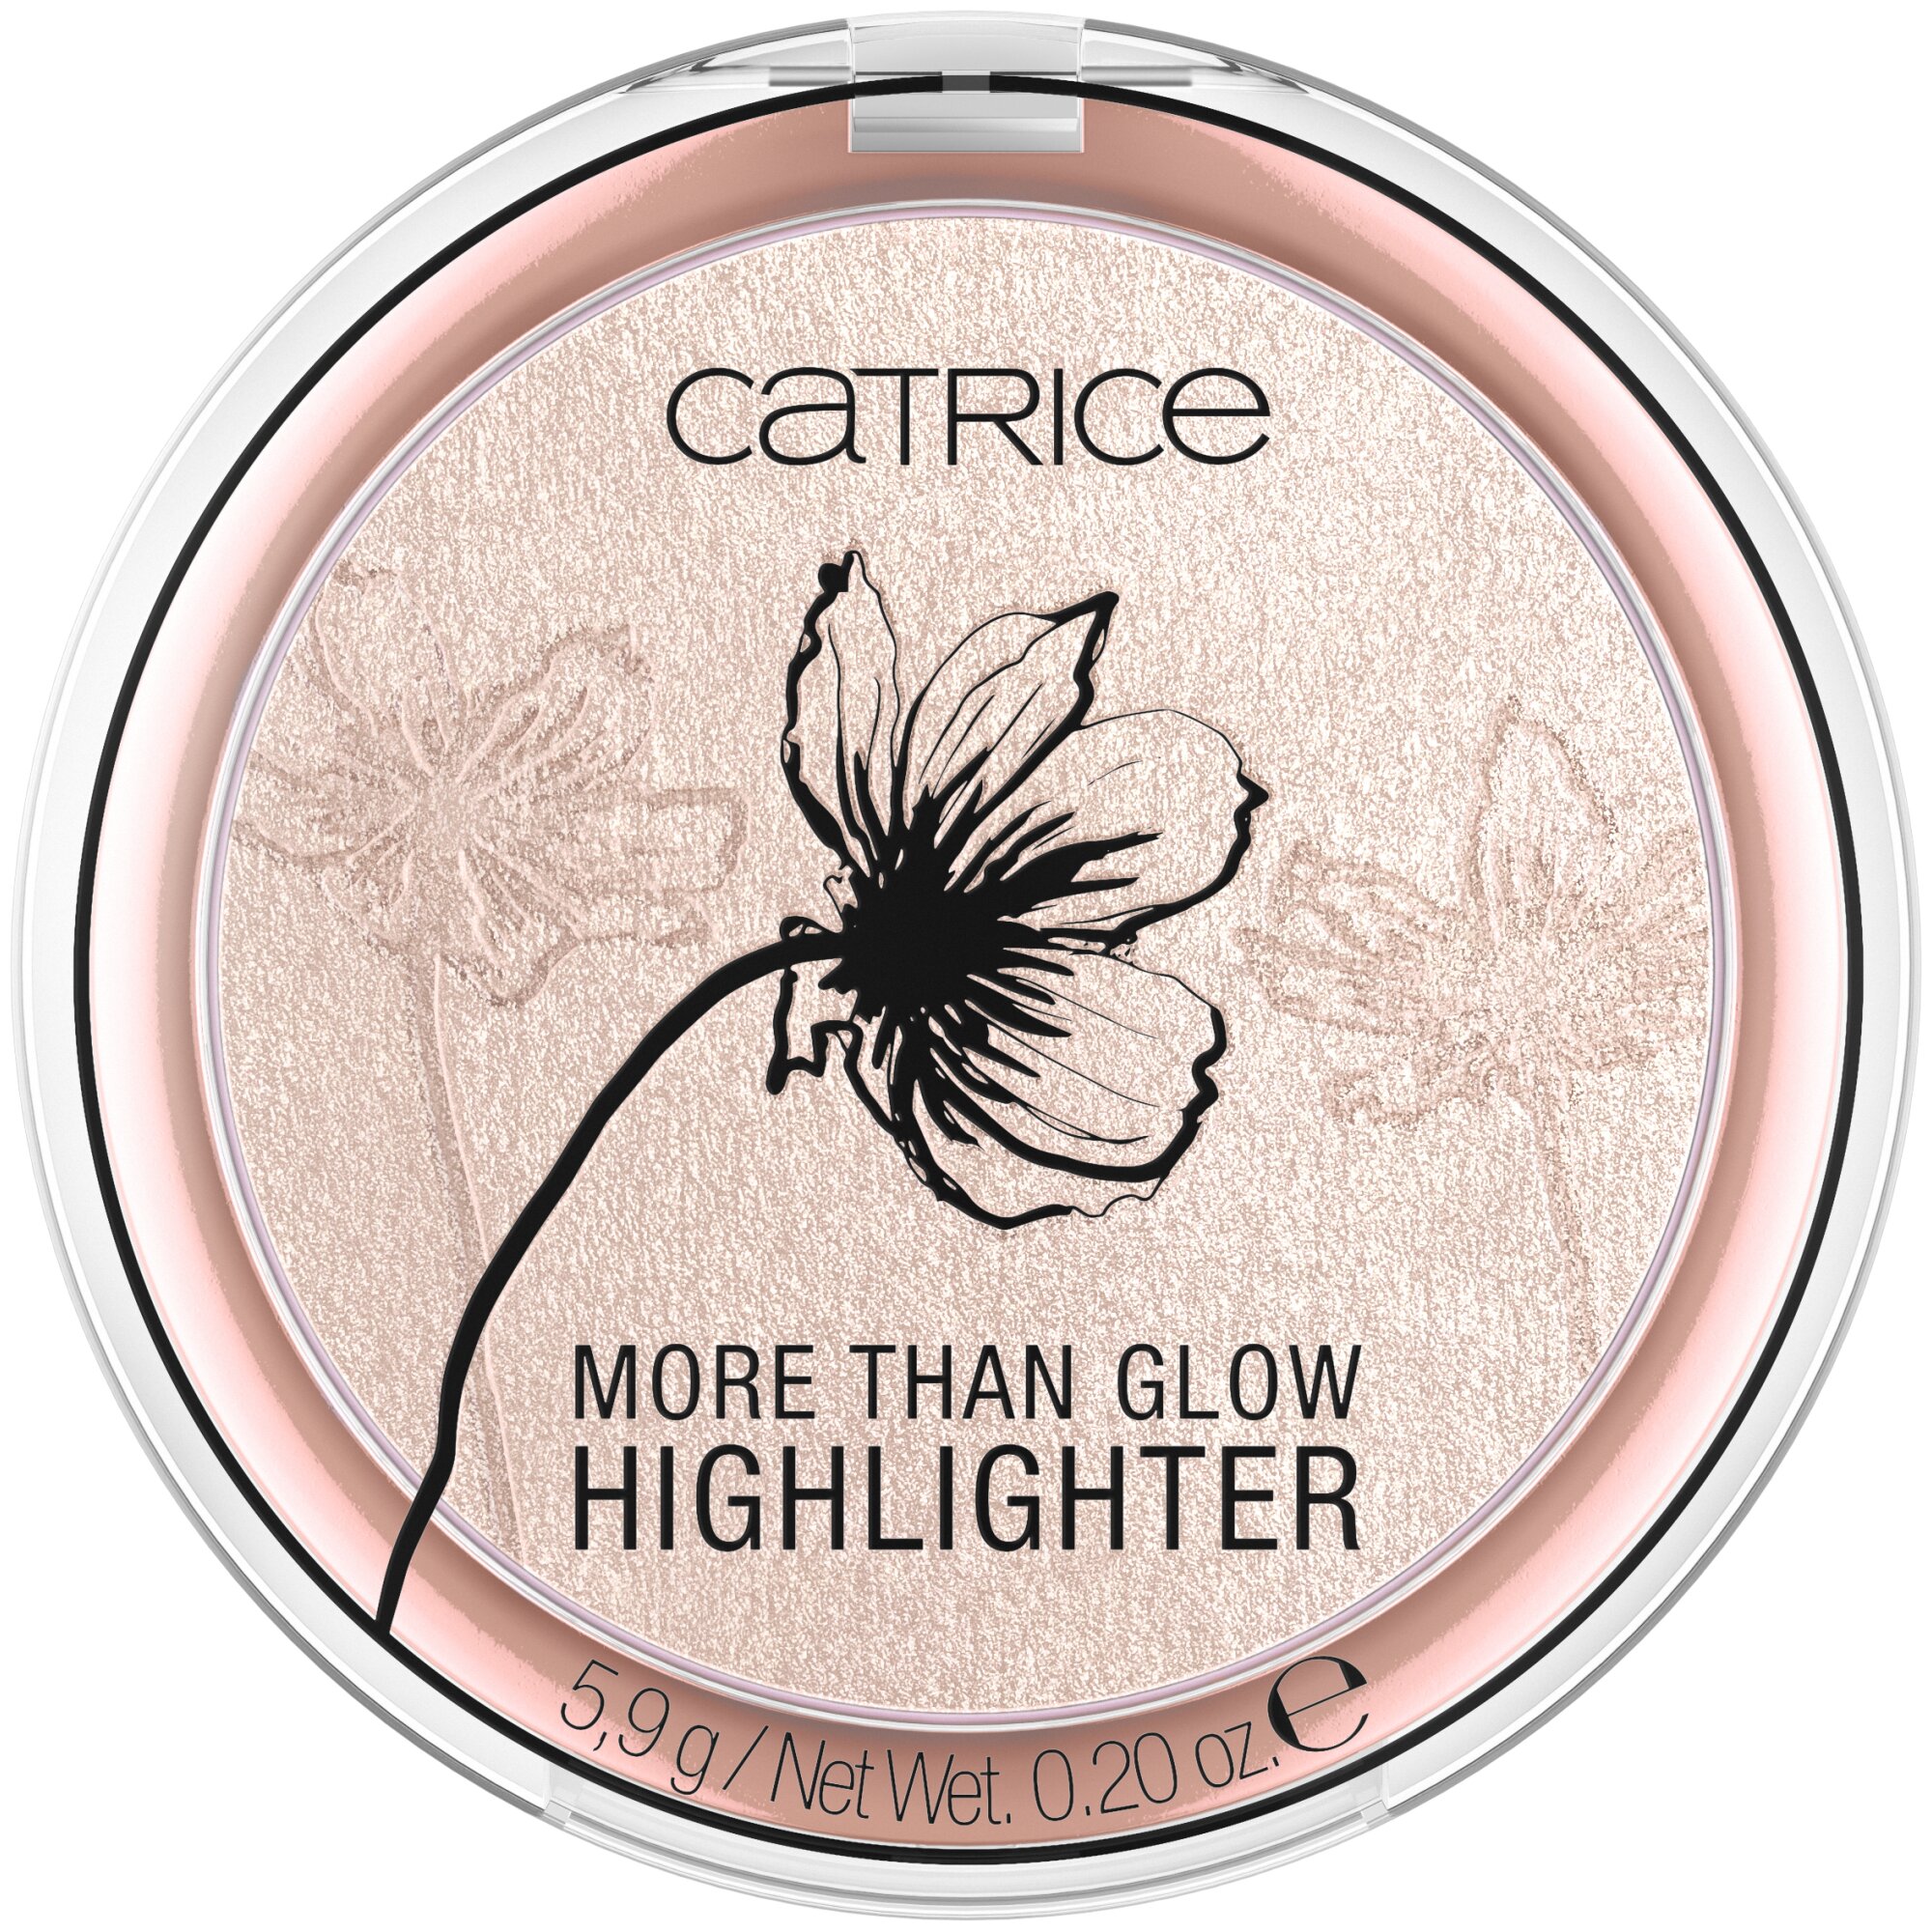 Pudra iluminatoare More Than Glow Highlighter, 020 - Supreme Rose Beam, 5.9 g, Catrice